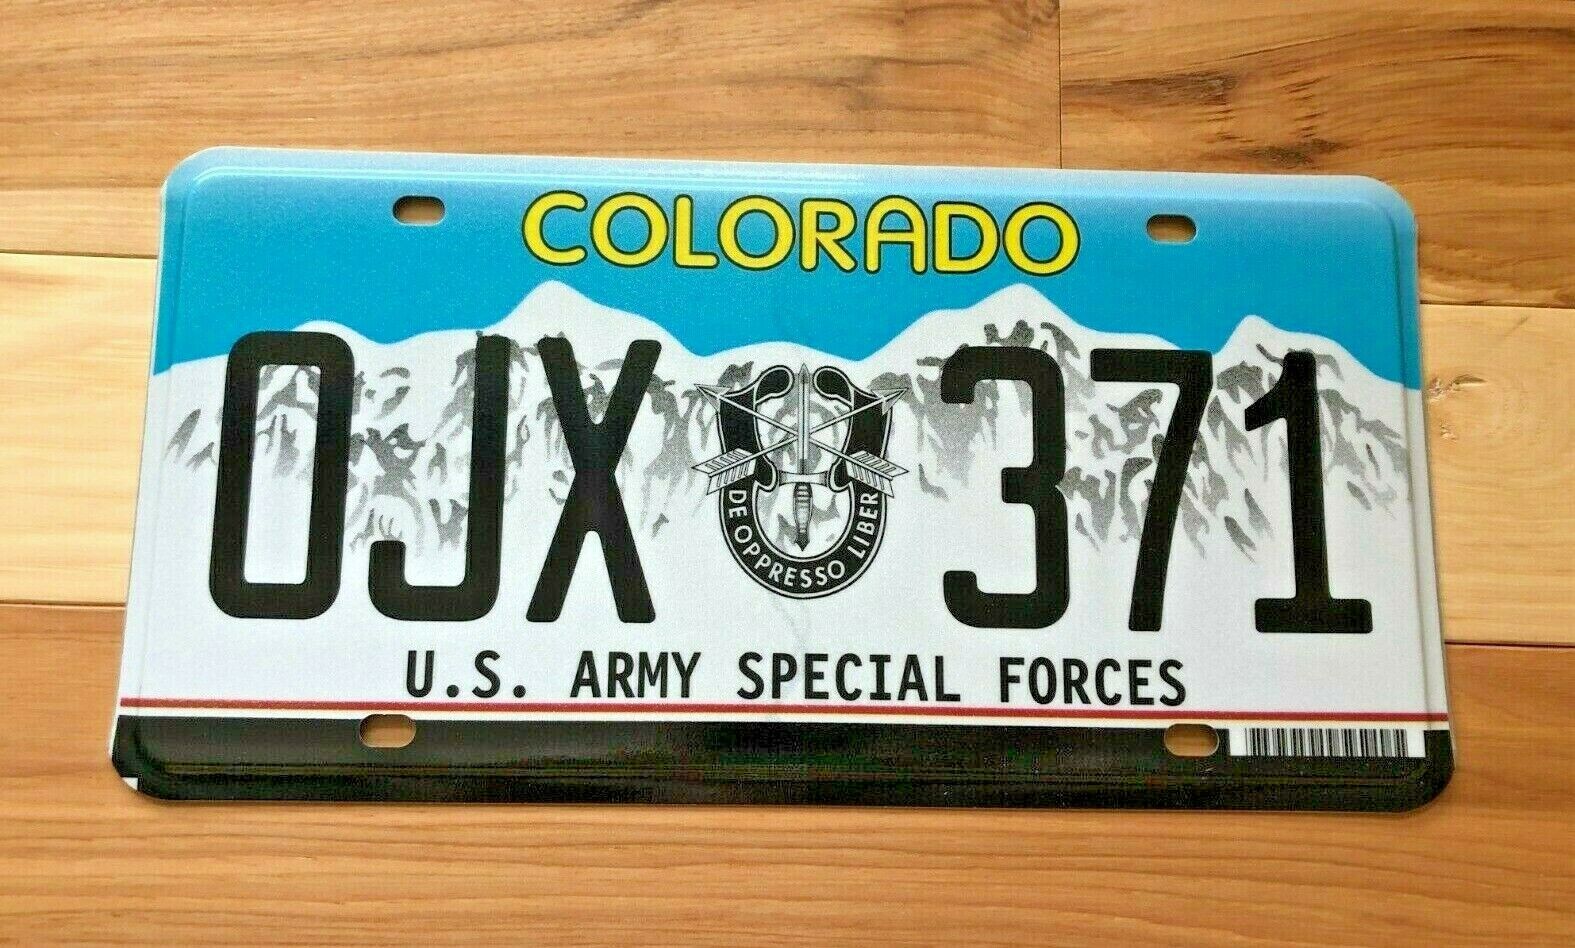 Colorado U.S. Army Special Forces License Plate